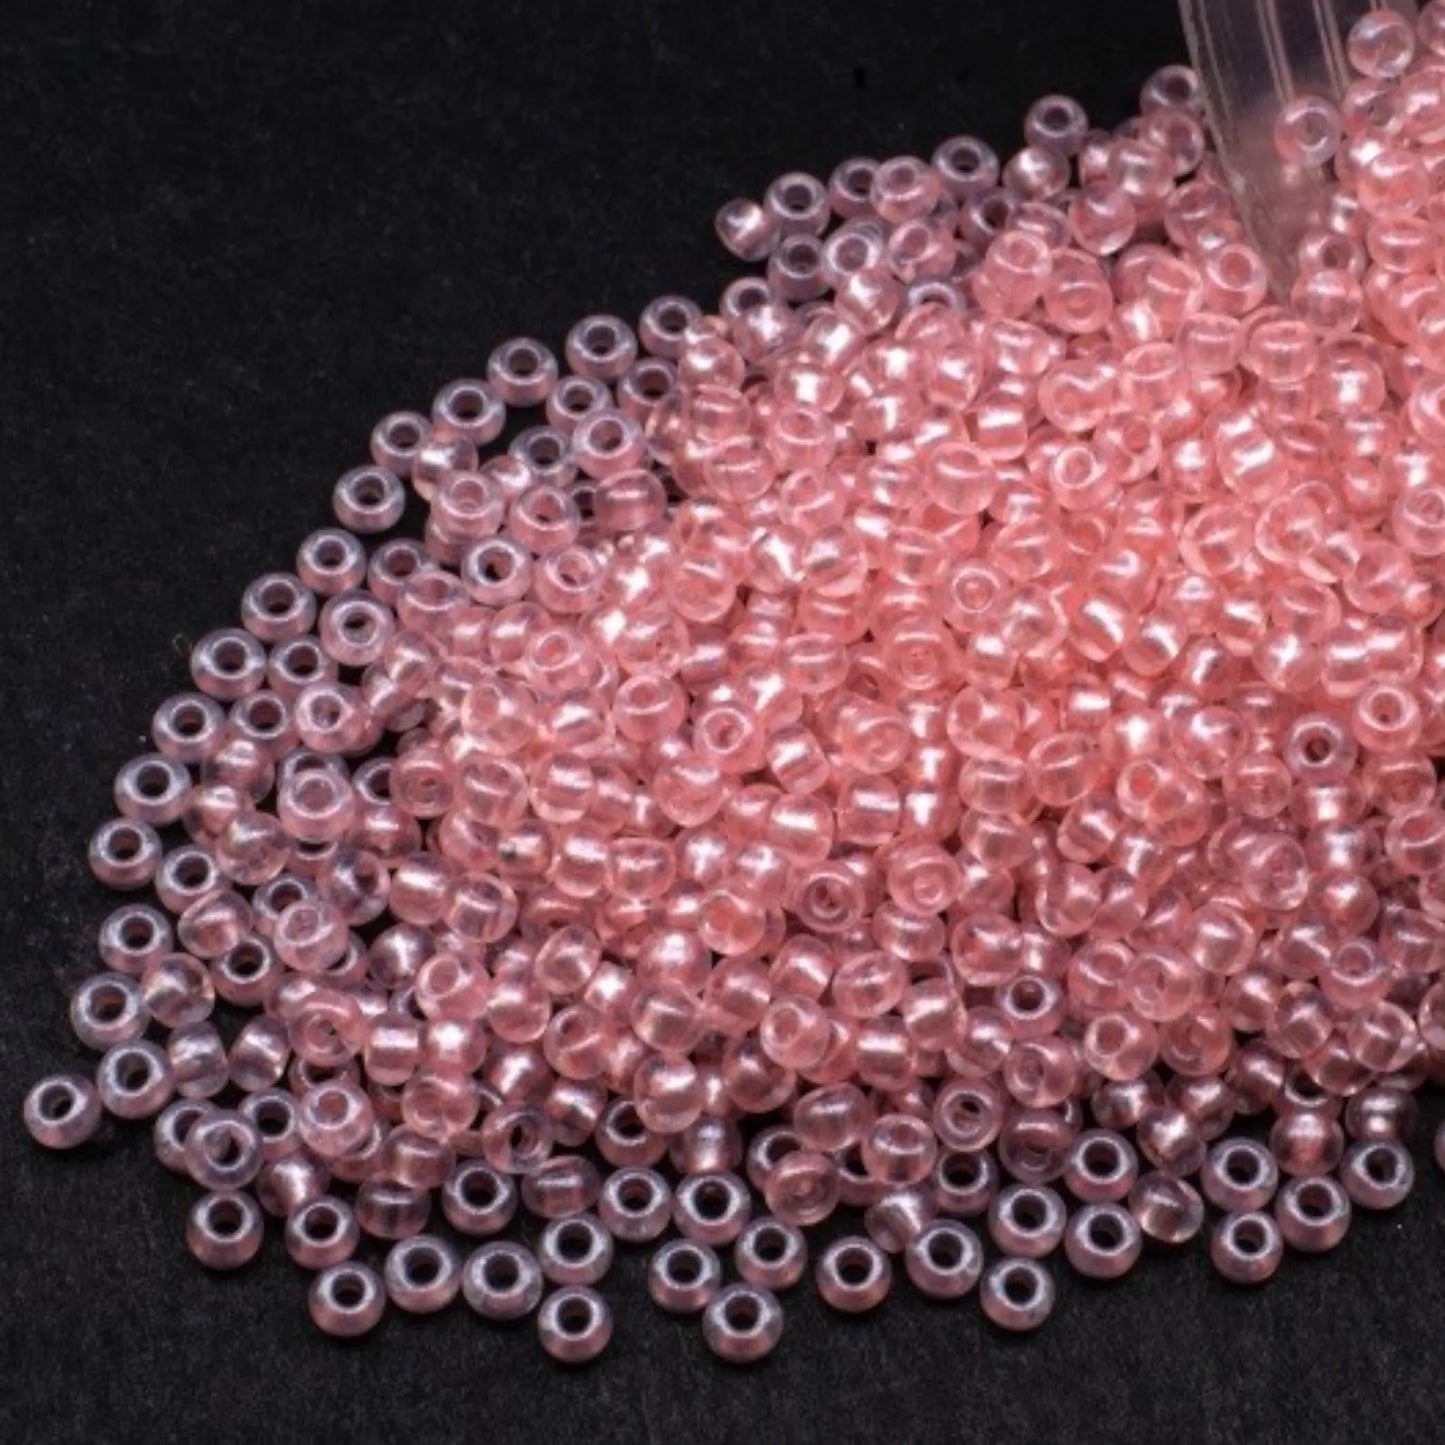 08198 Czech seed beads PRECIOSA Rocailles 10/0 pink. Crystal - Terra Pearl.